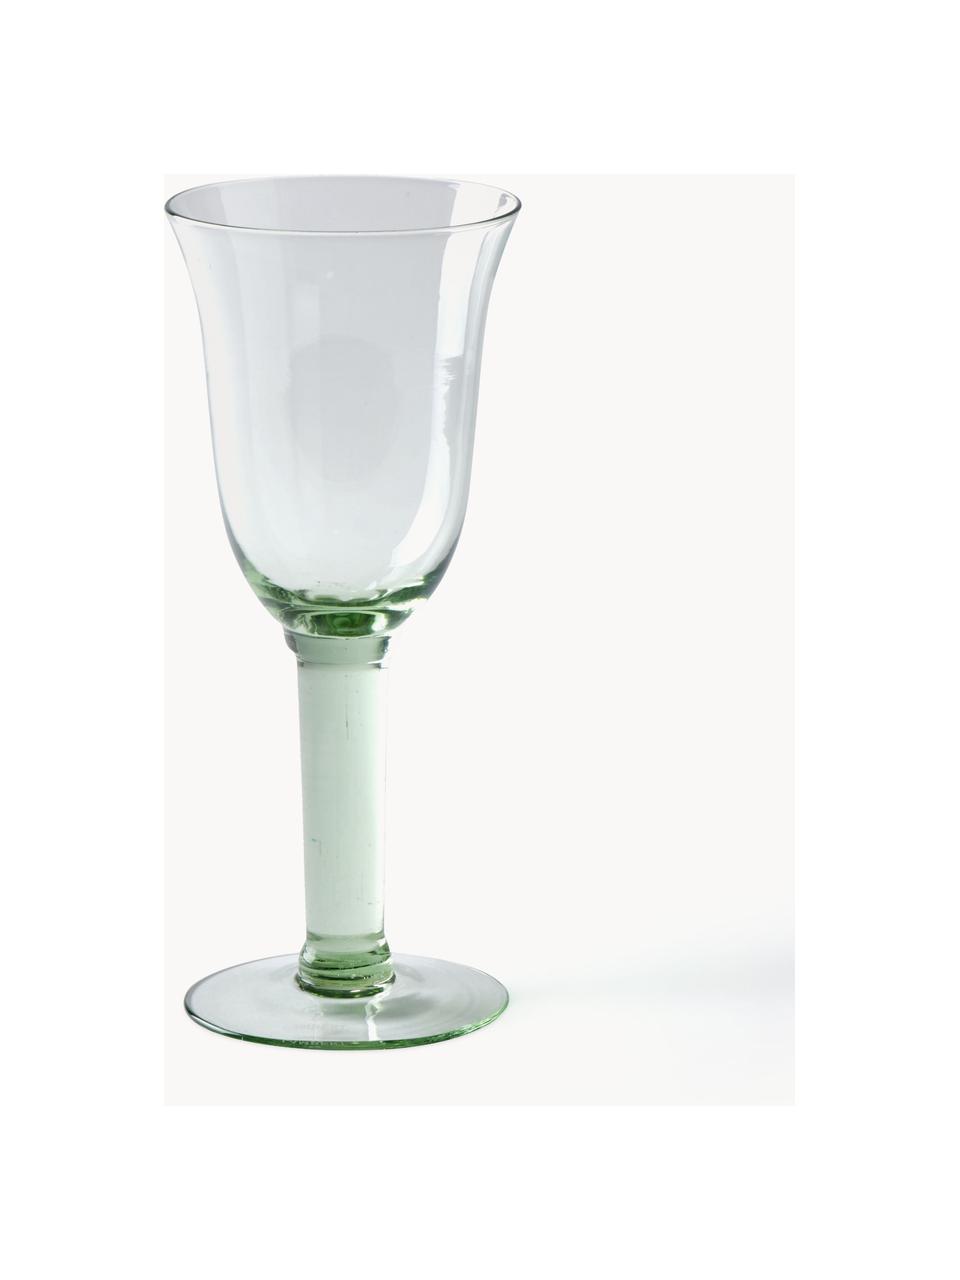 Bicchieri da vino bianco in vetro soffiato Corsica 6 pz, Vetro, Verde chiaro trasparente, Ø 8 x Alt. 19 cm,  350 ml